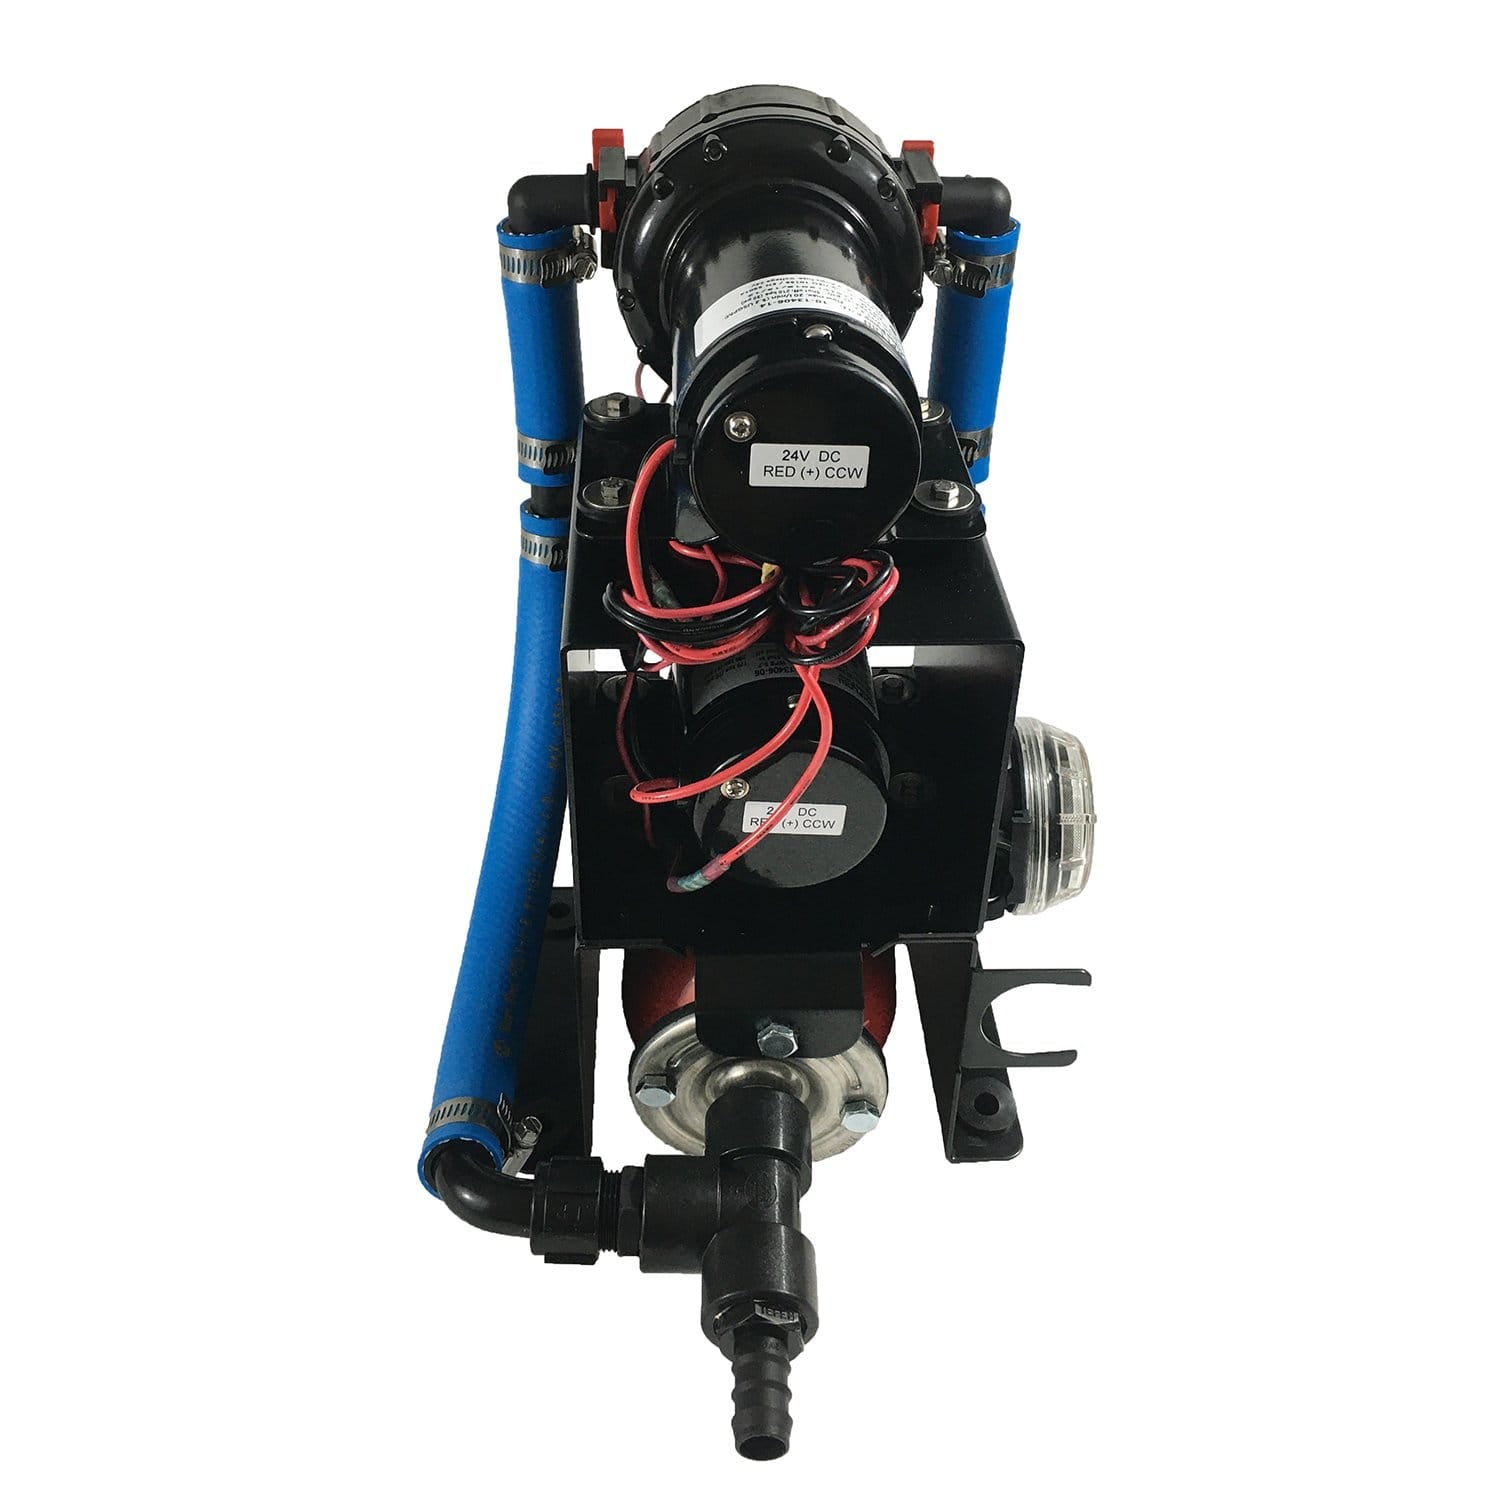 Johnson Pump 10-13409-02 Aqua Jet Duo Water Pressure System 10.4 GPM 24V